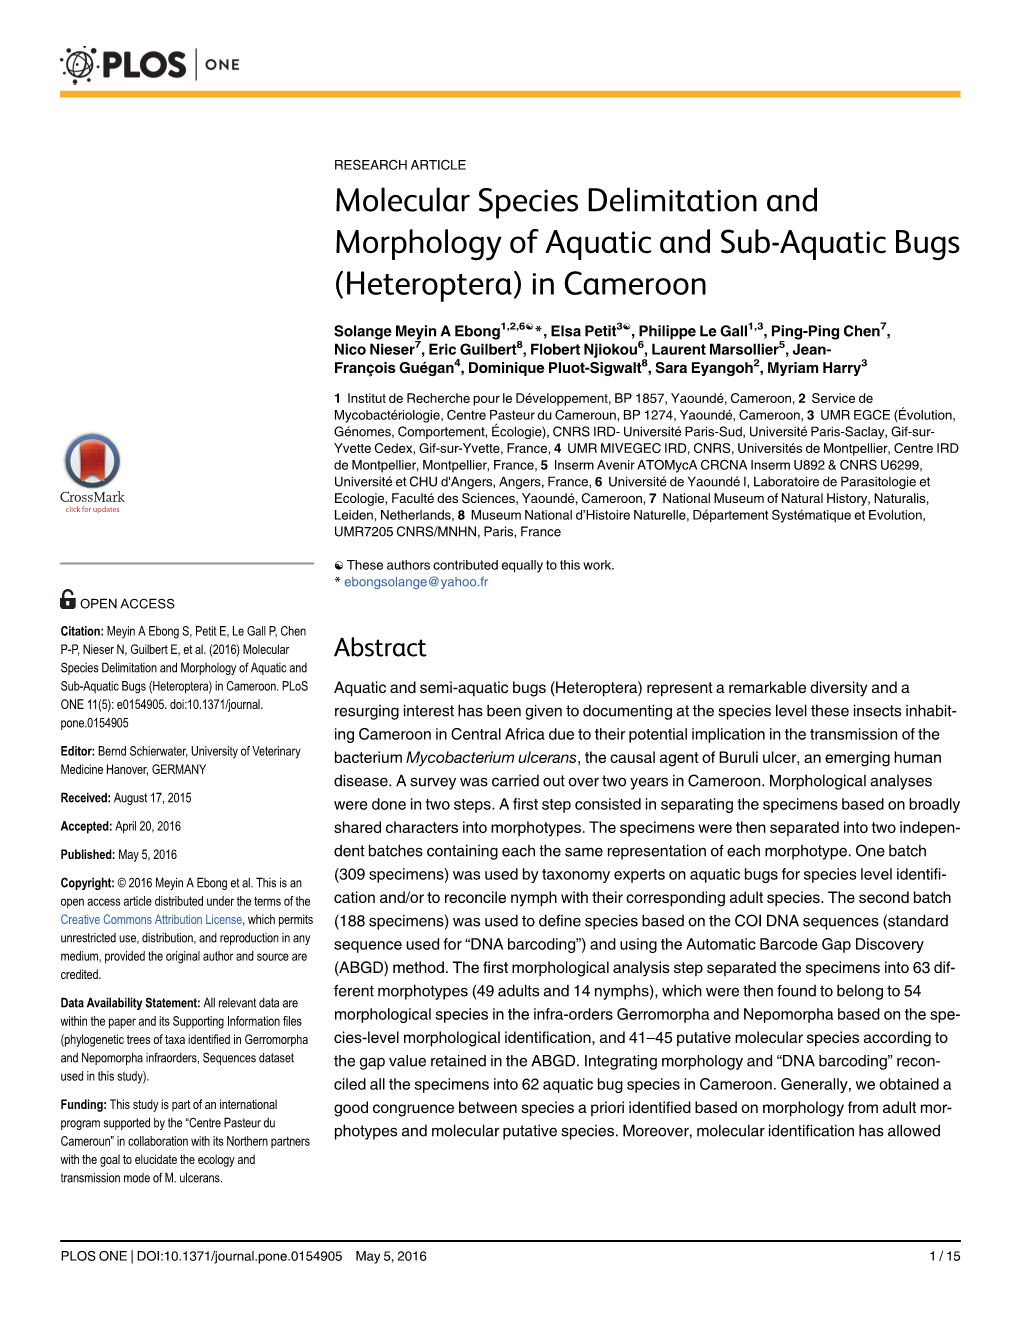 Molecular Species Delimitation and Morphology of Aquatic and Sub-Aquatic Bugs (Heteroptera) in Cameroon